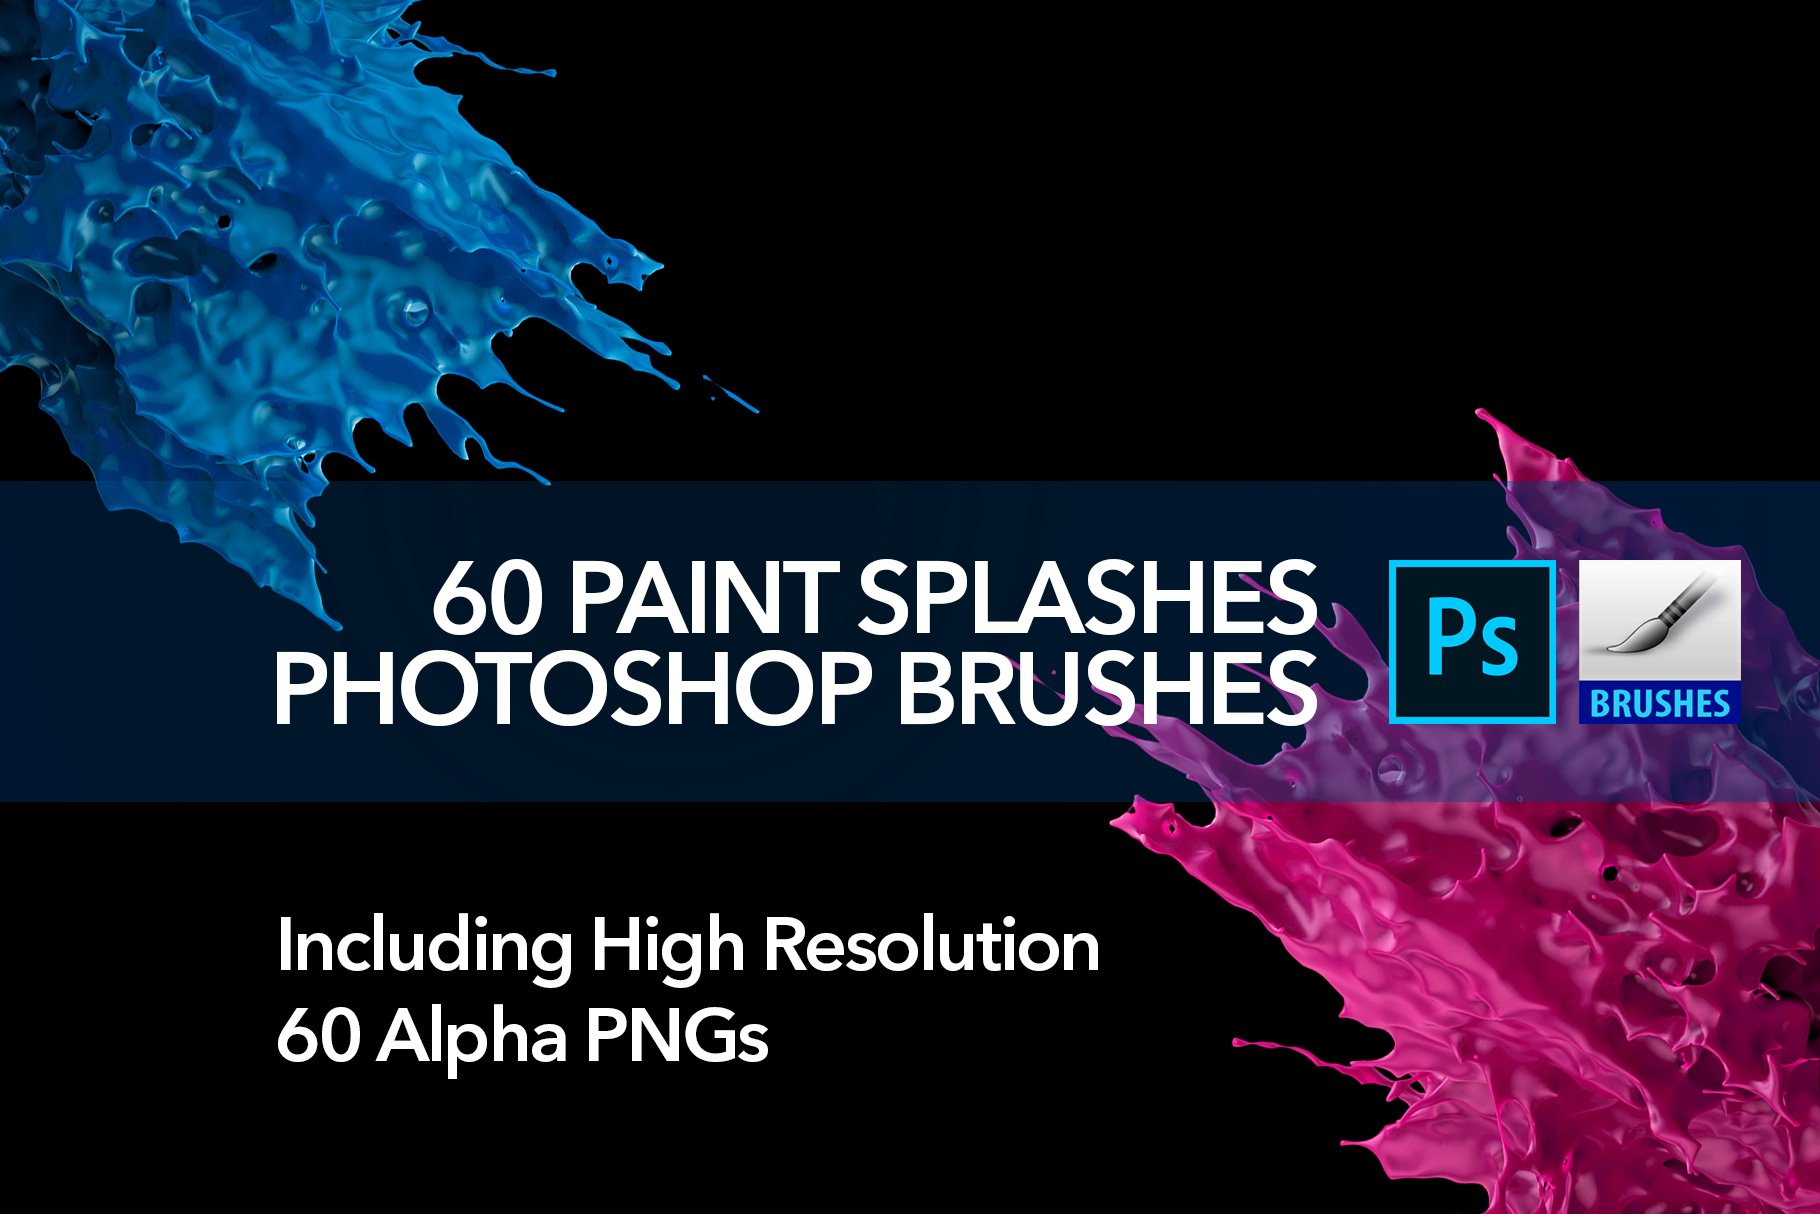 60 Paint Splash Brushes for PSpreview image.